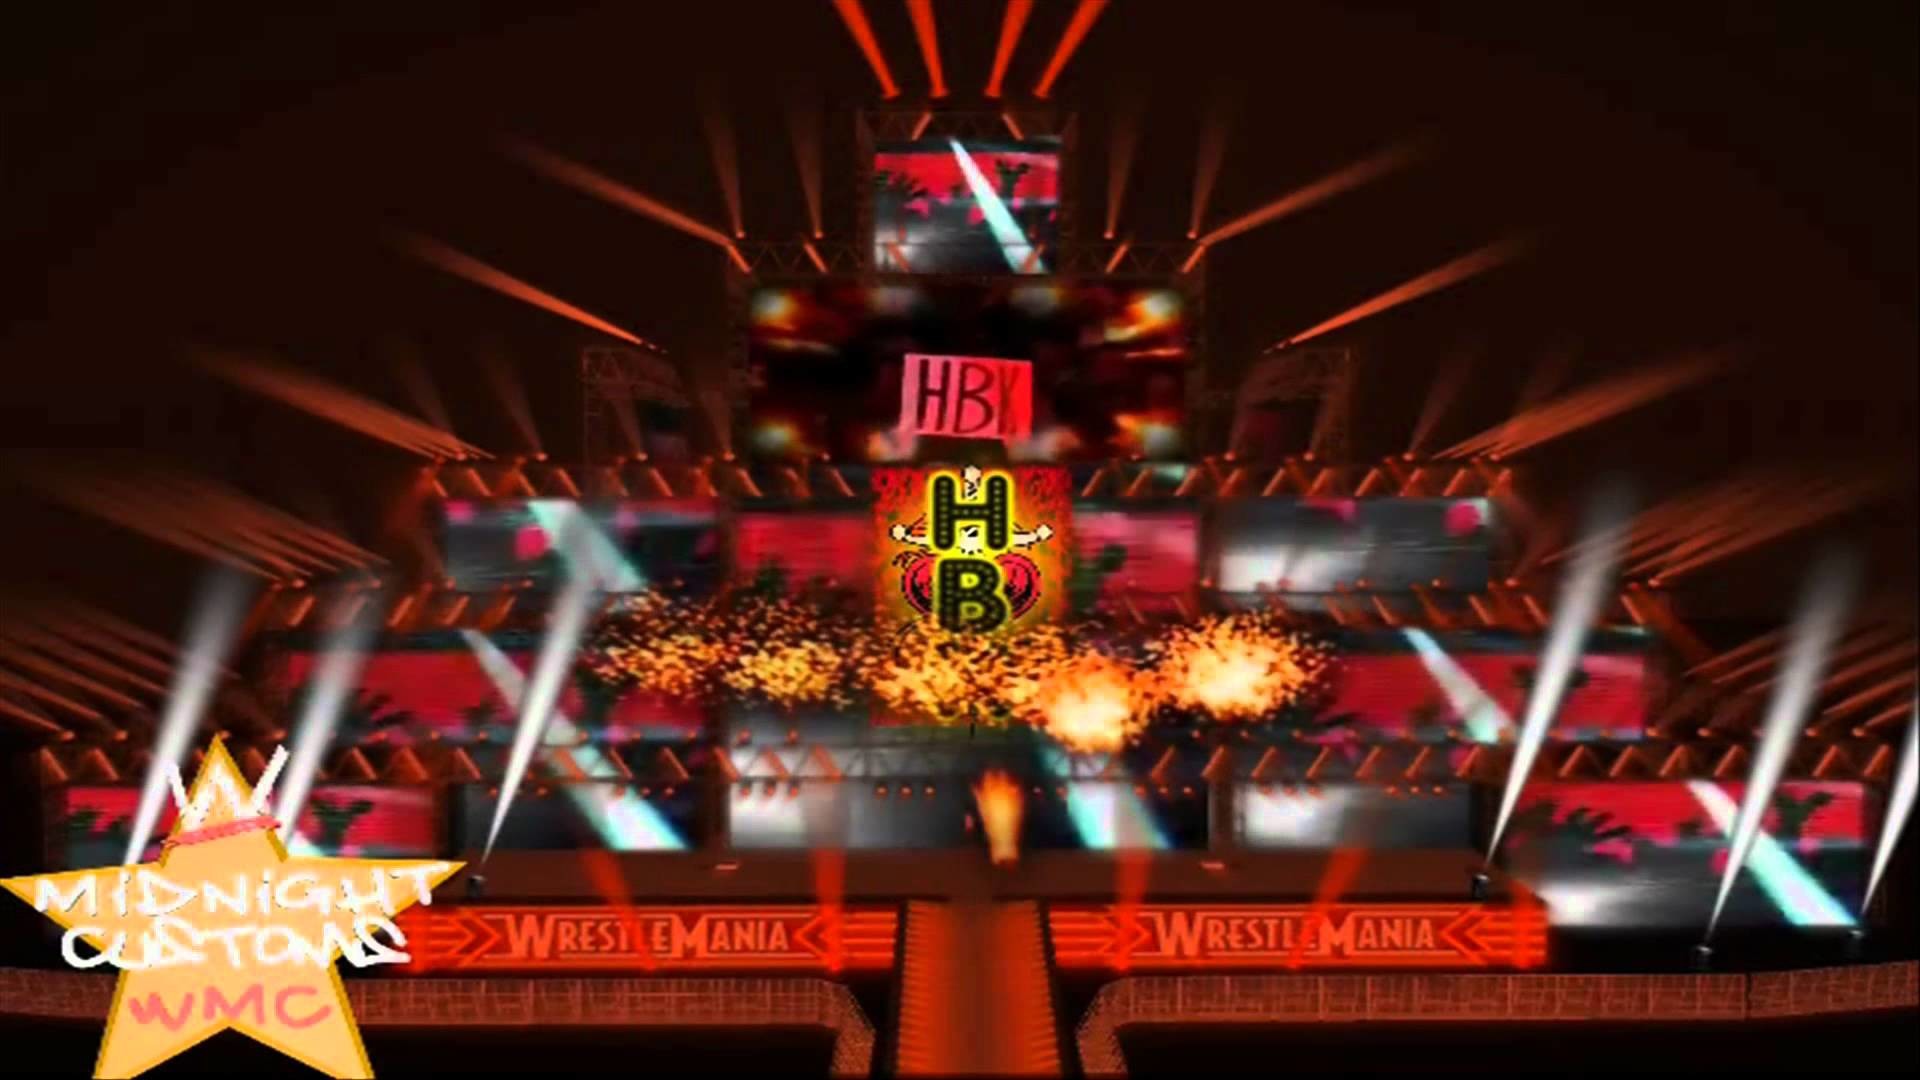 1920x1080 WWE WrestleMania 26 Shawn Michaels (HBK) Entrance Stage + Pyro HD - YouTube